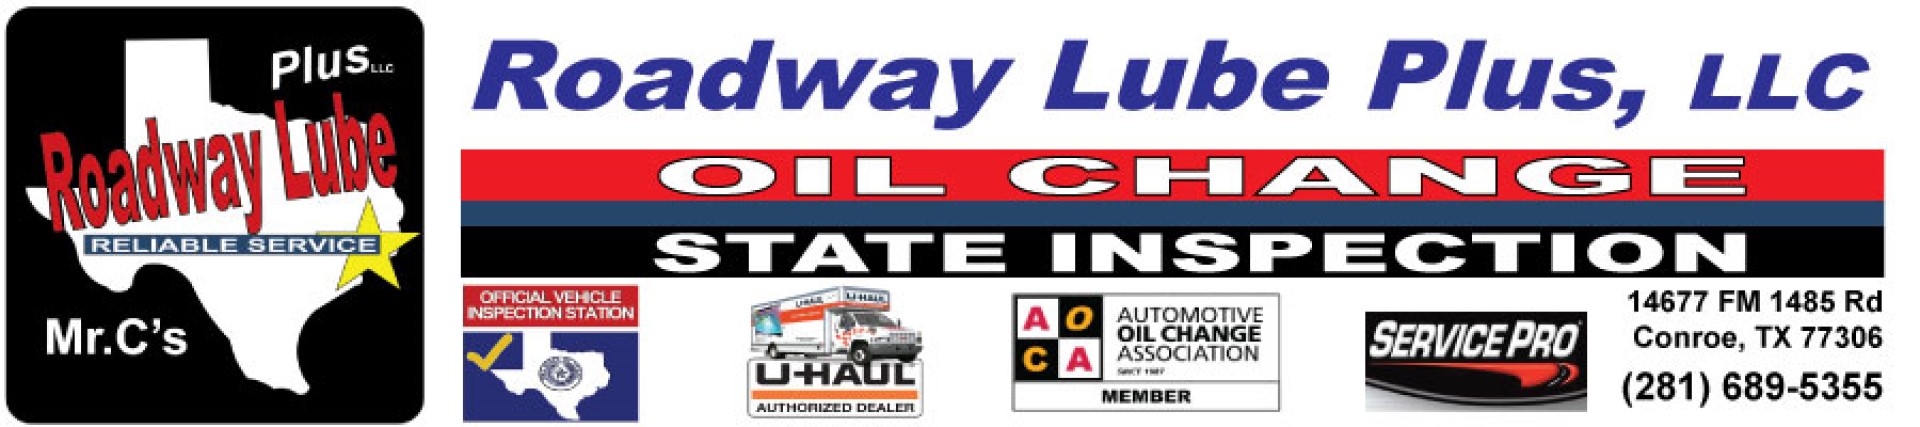 Roadway Lube Plus, LLC